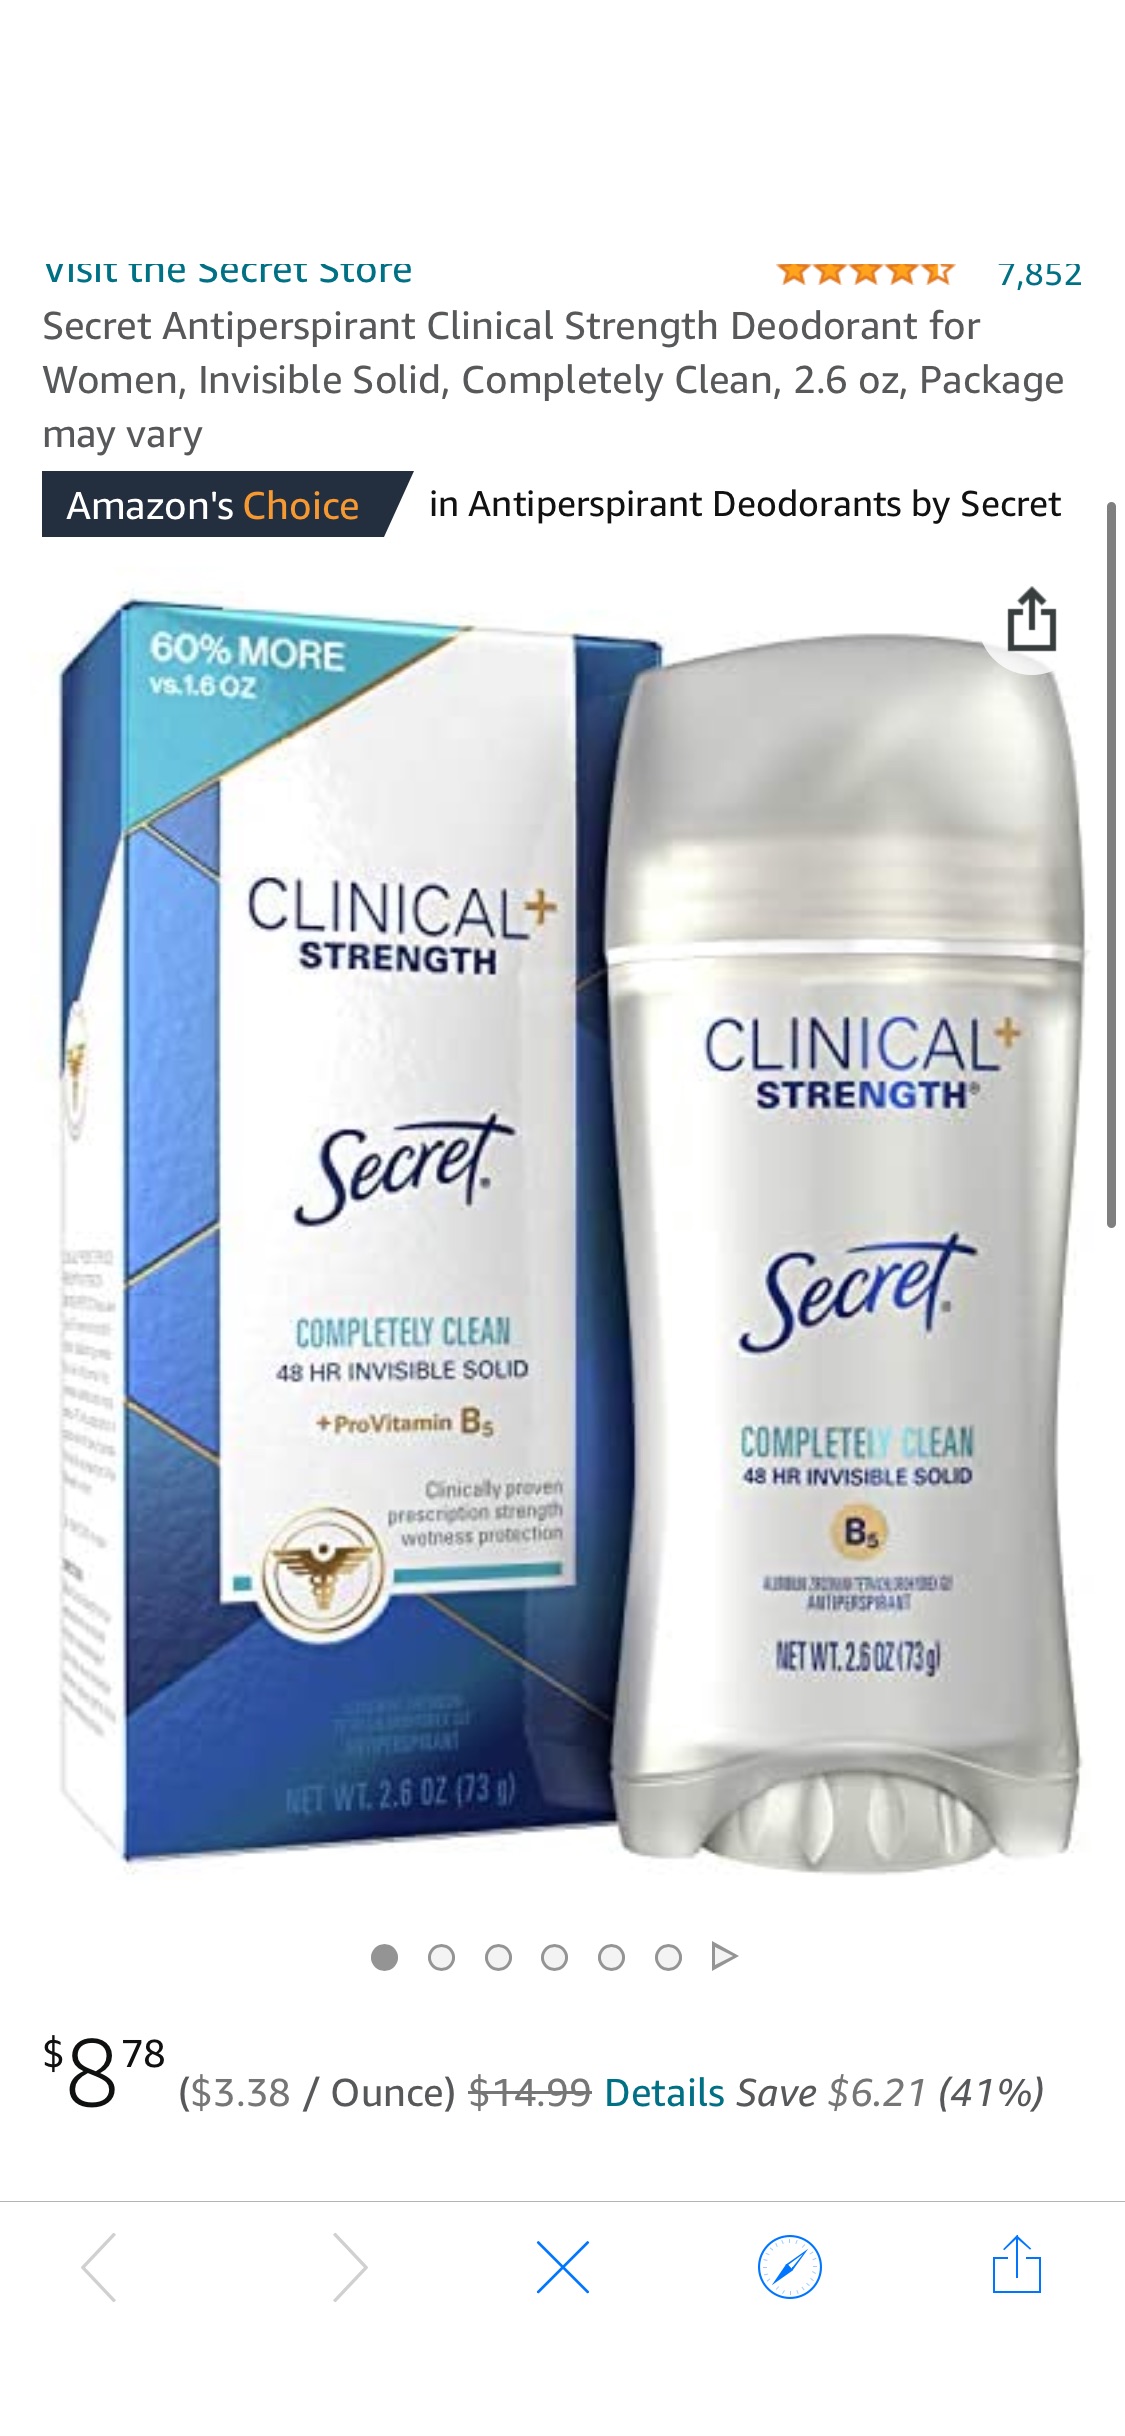 Secret Antiperspirant Clinical Strength Deodorant for Women，隐形固体，完全清洁，2.6 盎司，包装可能有所不同